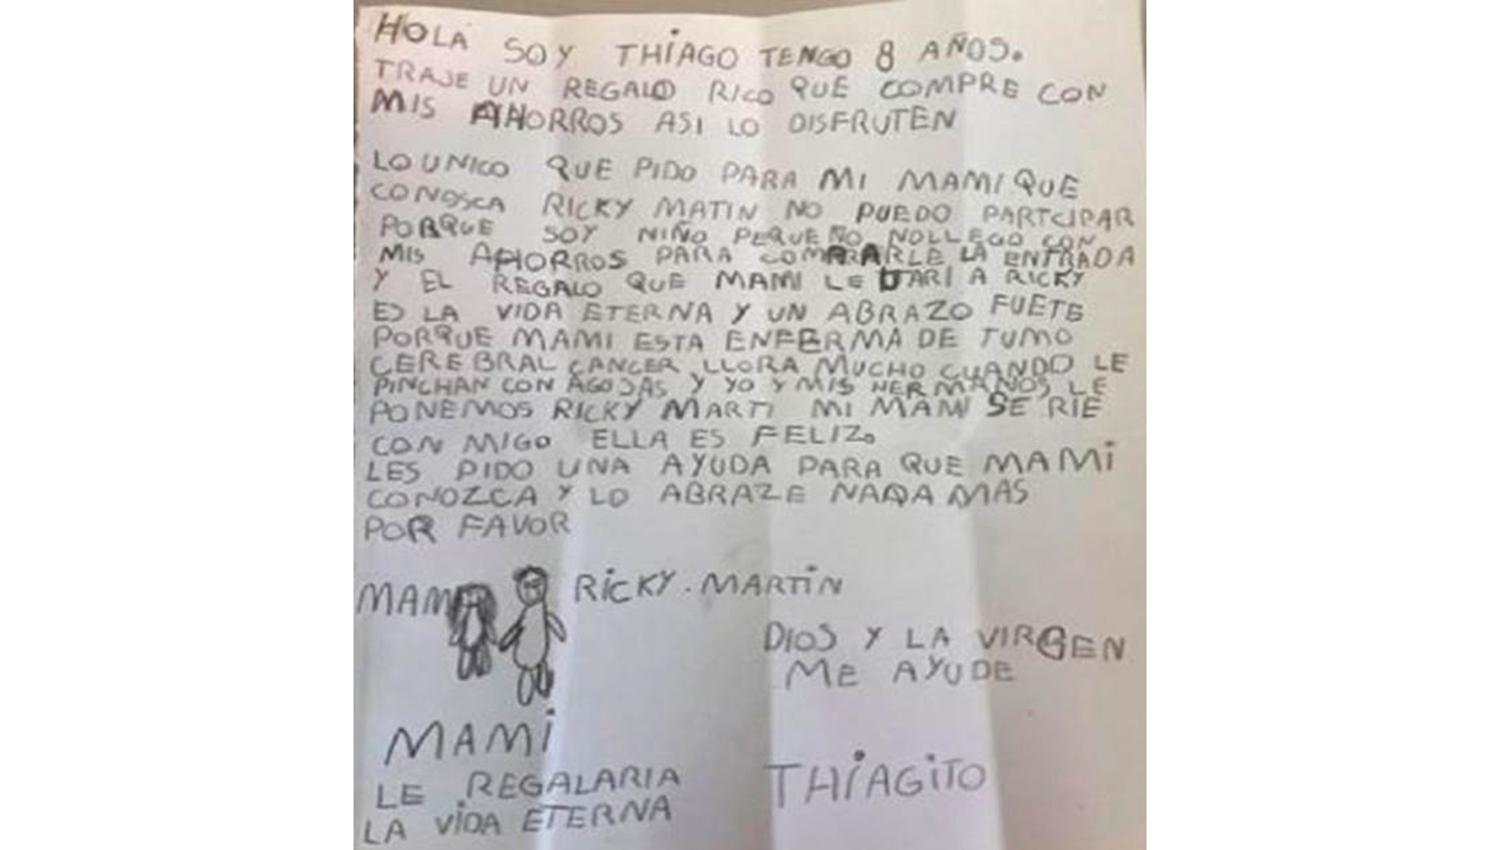 La carta que envió el nene. FOTO TOMADA DE / ELDOCE.TV